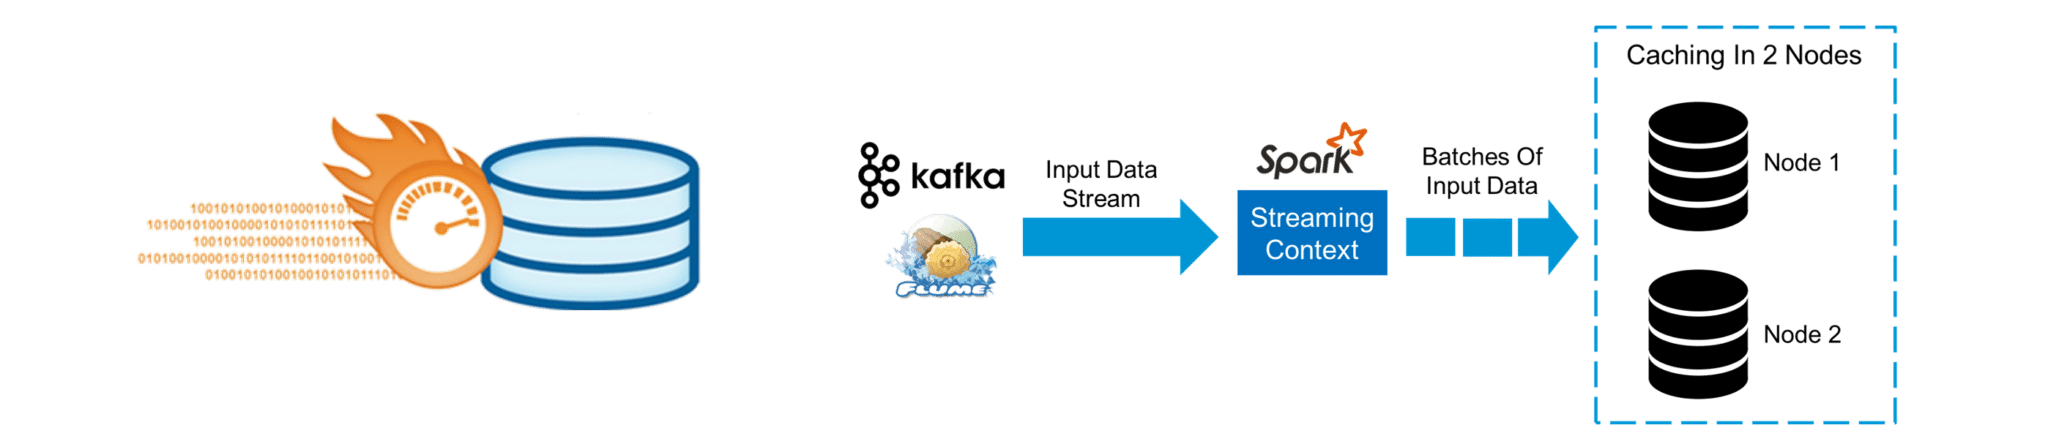 Caching - Spark Streaming - Edureka